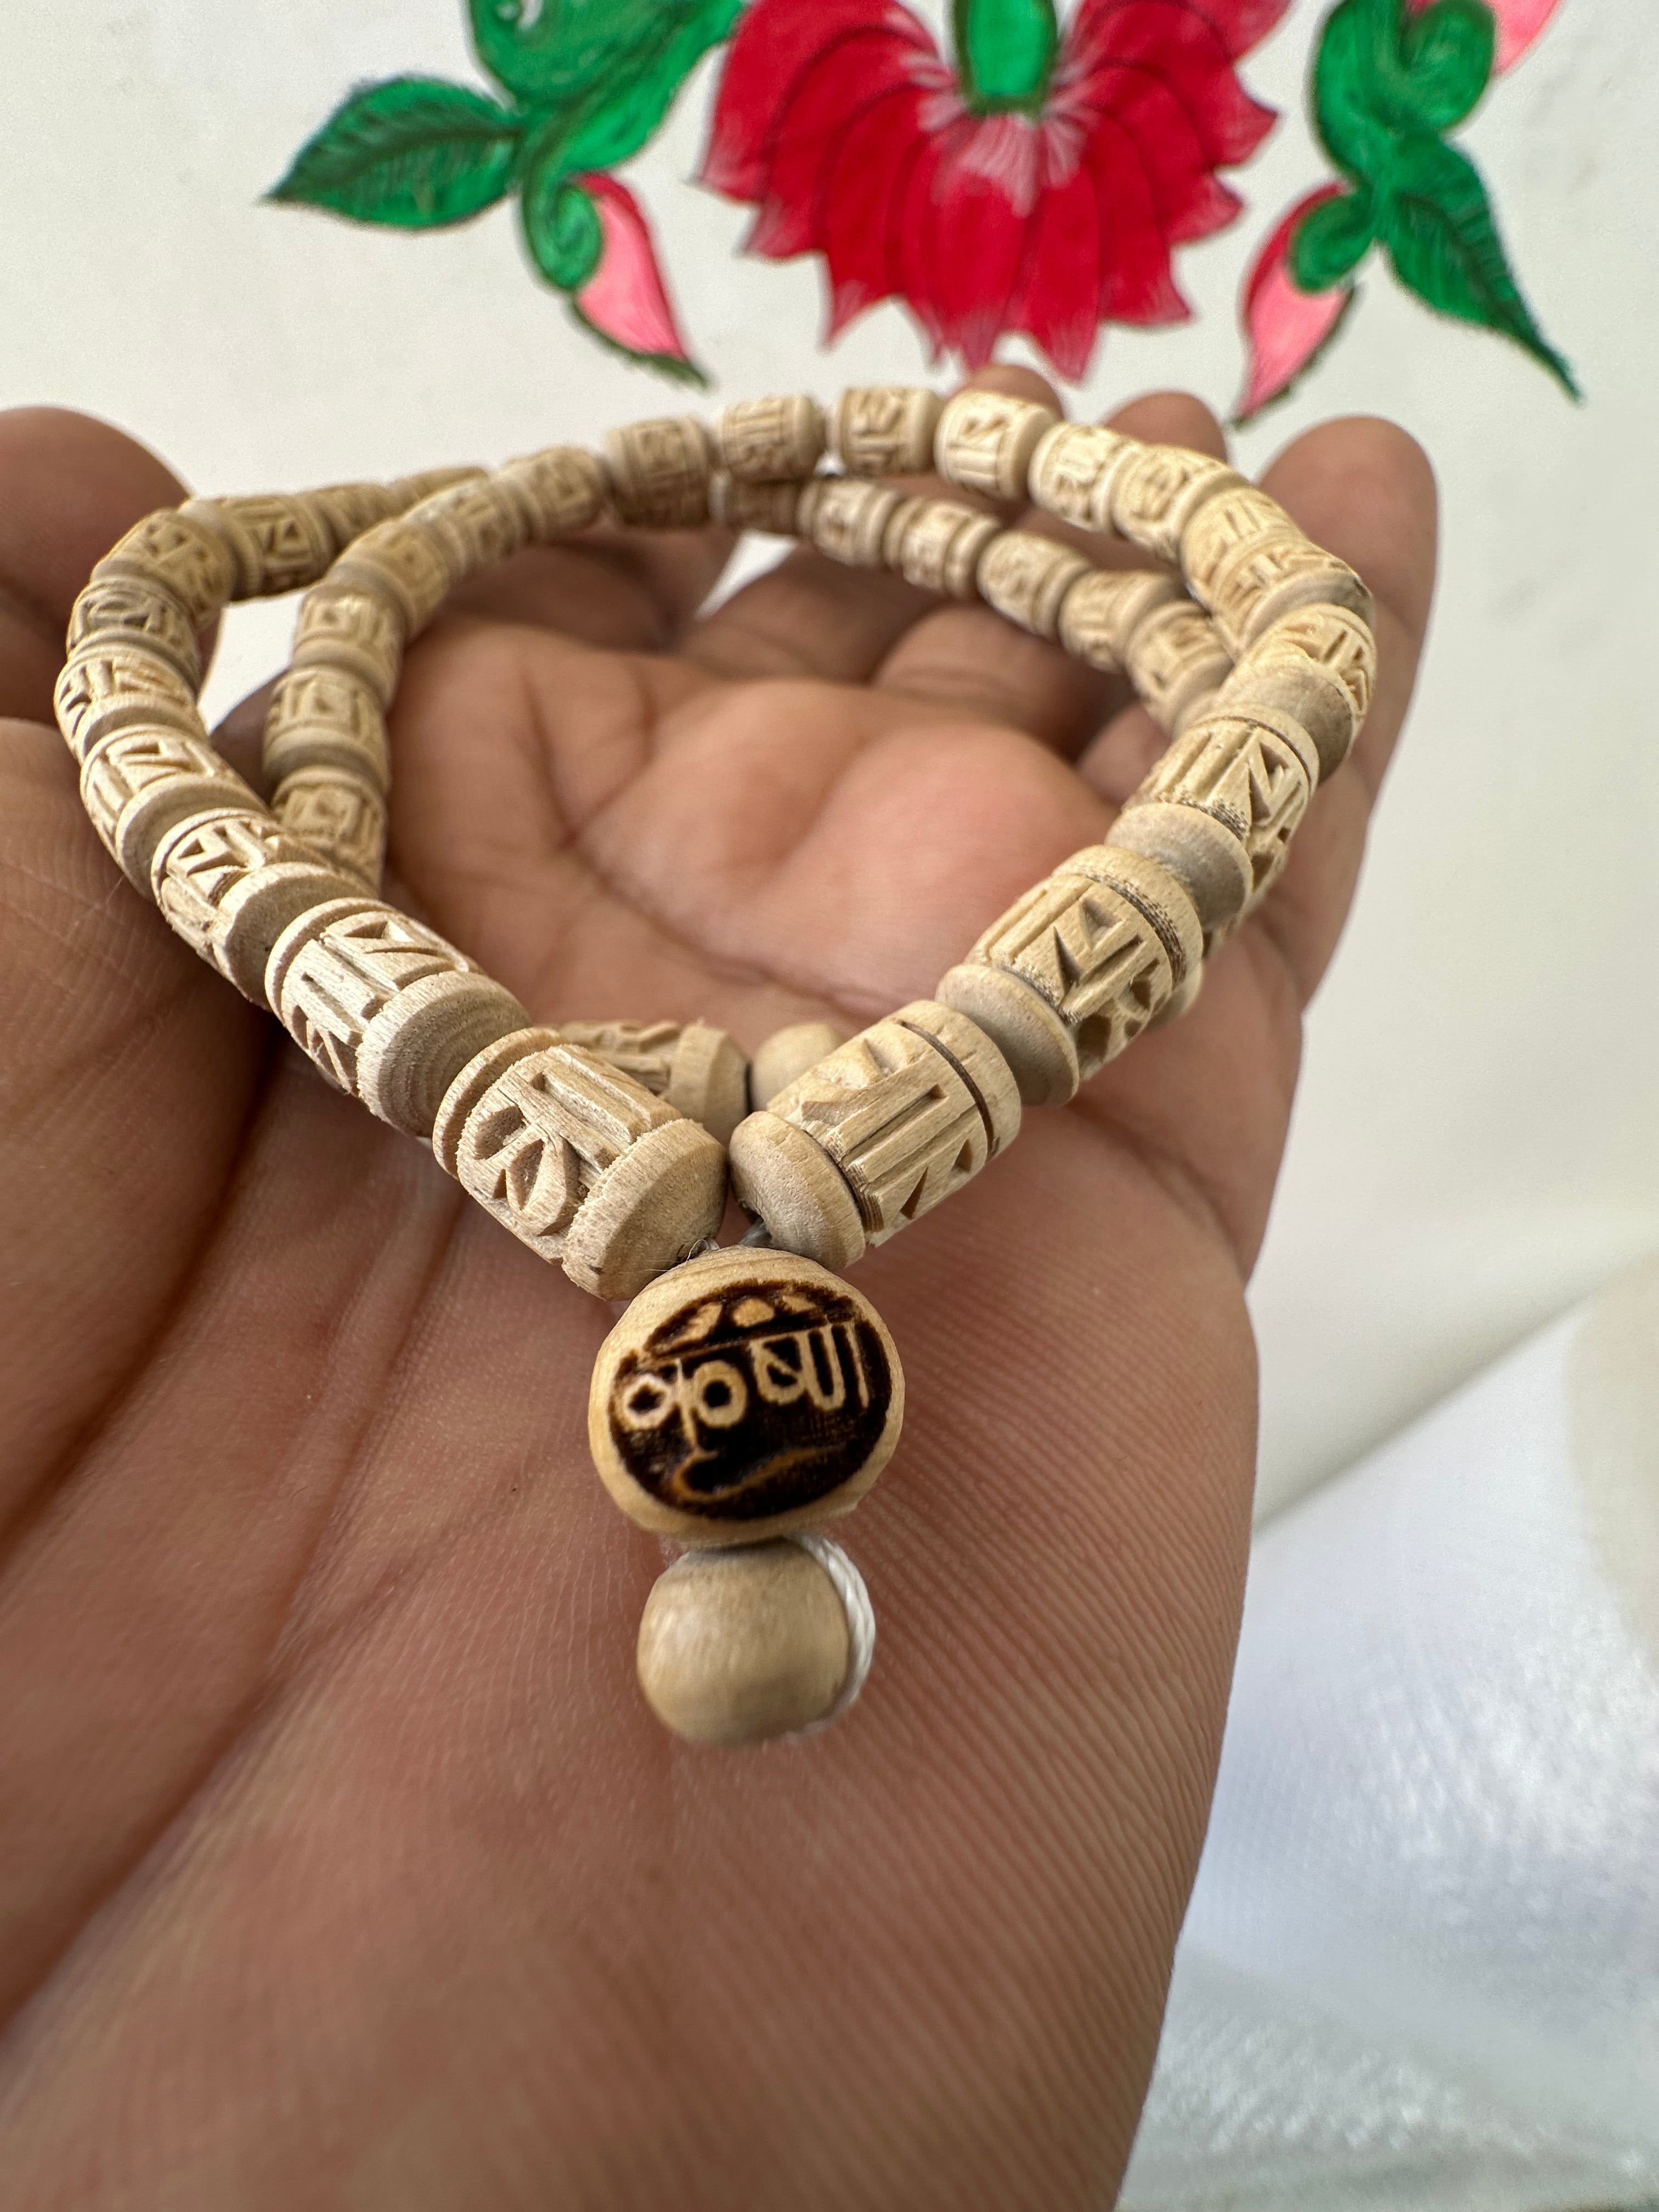 Radha Engraved Tulsi Bracelet, Tulasi Bracelet, Pure Tulsi Beads, Holy  Basil Seeds, Radha Tulsi Bead Bracelet, Radha Krishna Jewelry, - Etsy